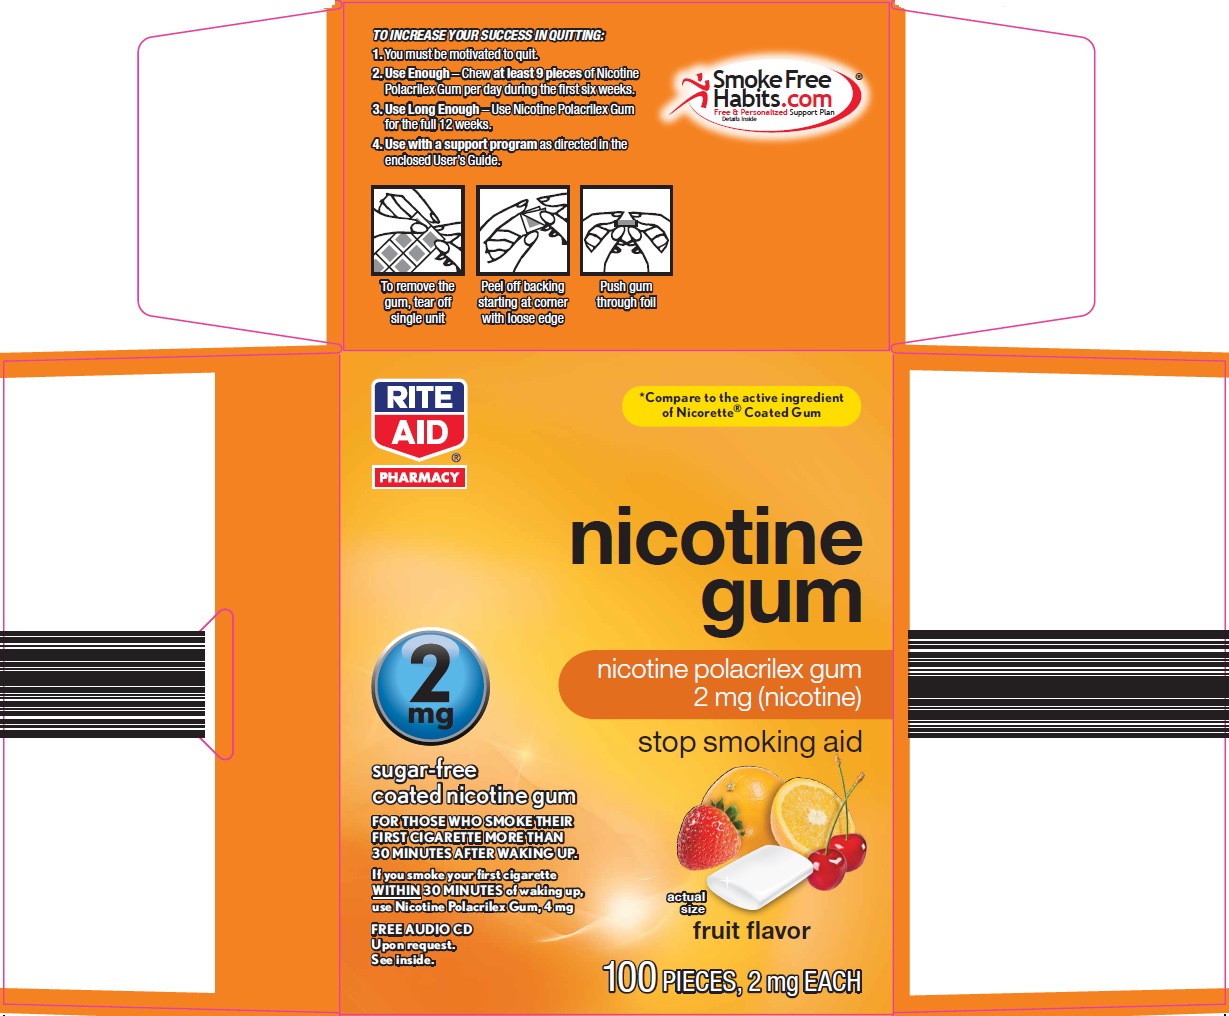 352-83-nicotine gum-1.jpg